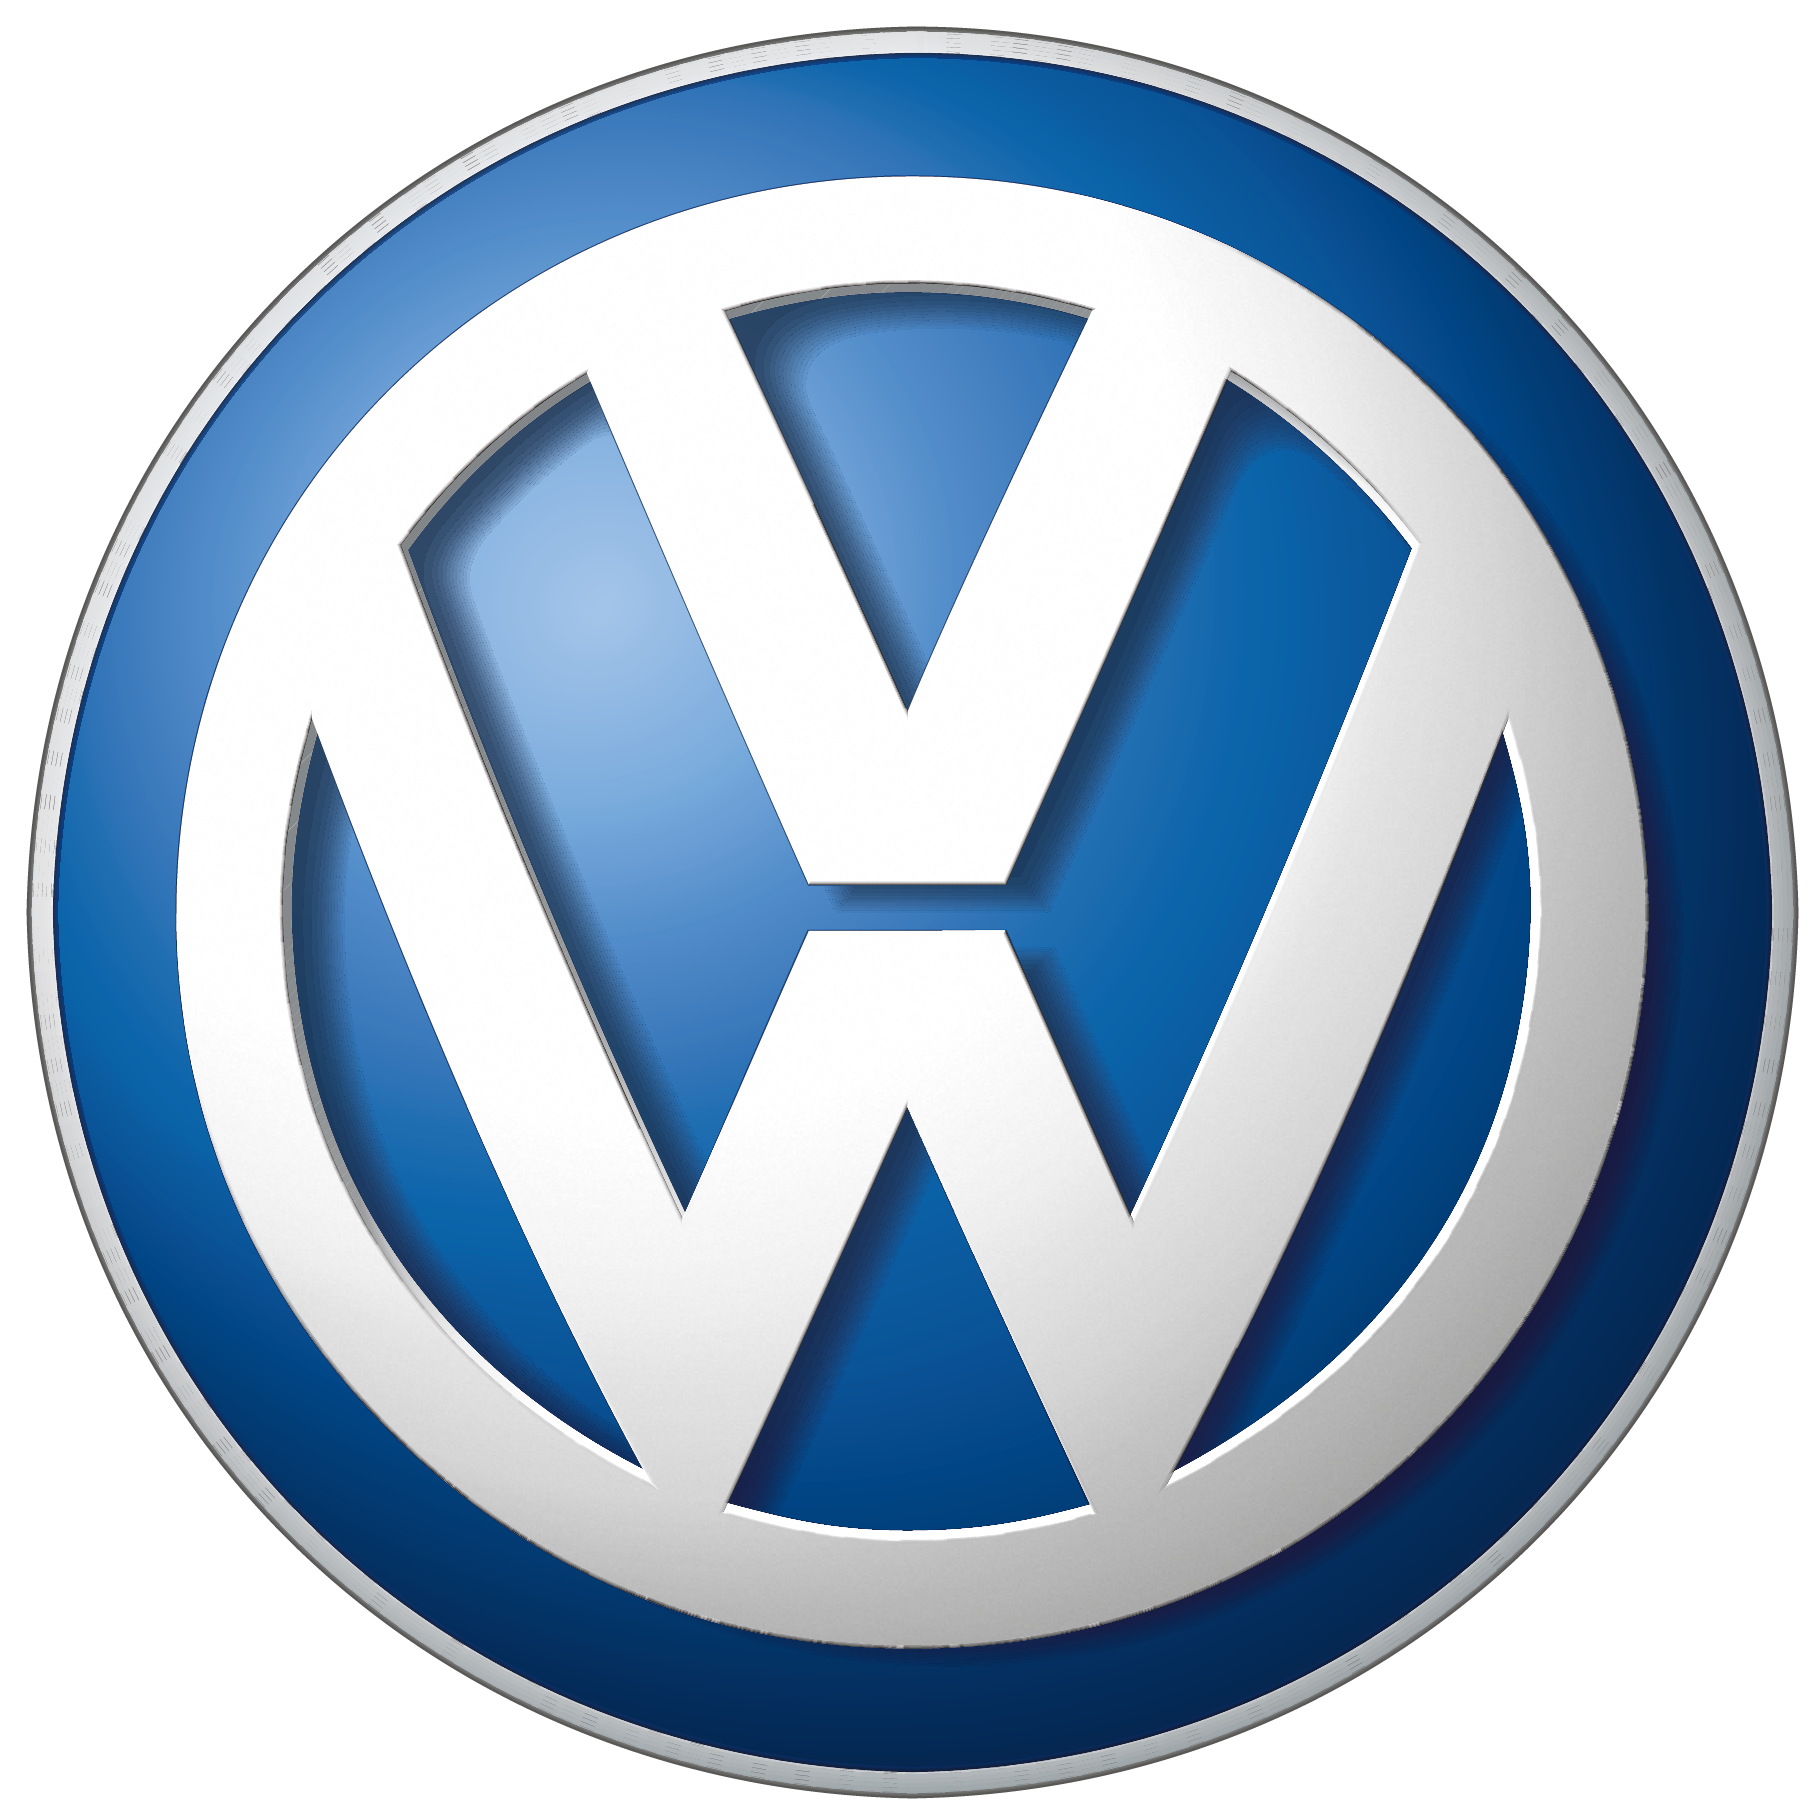 Attestation d’identification nationale Volkswagen